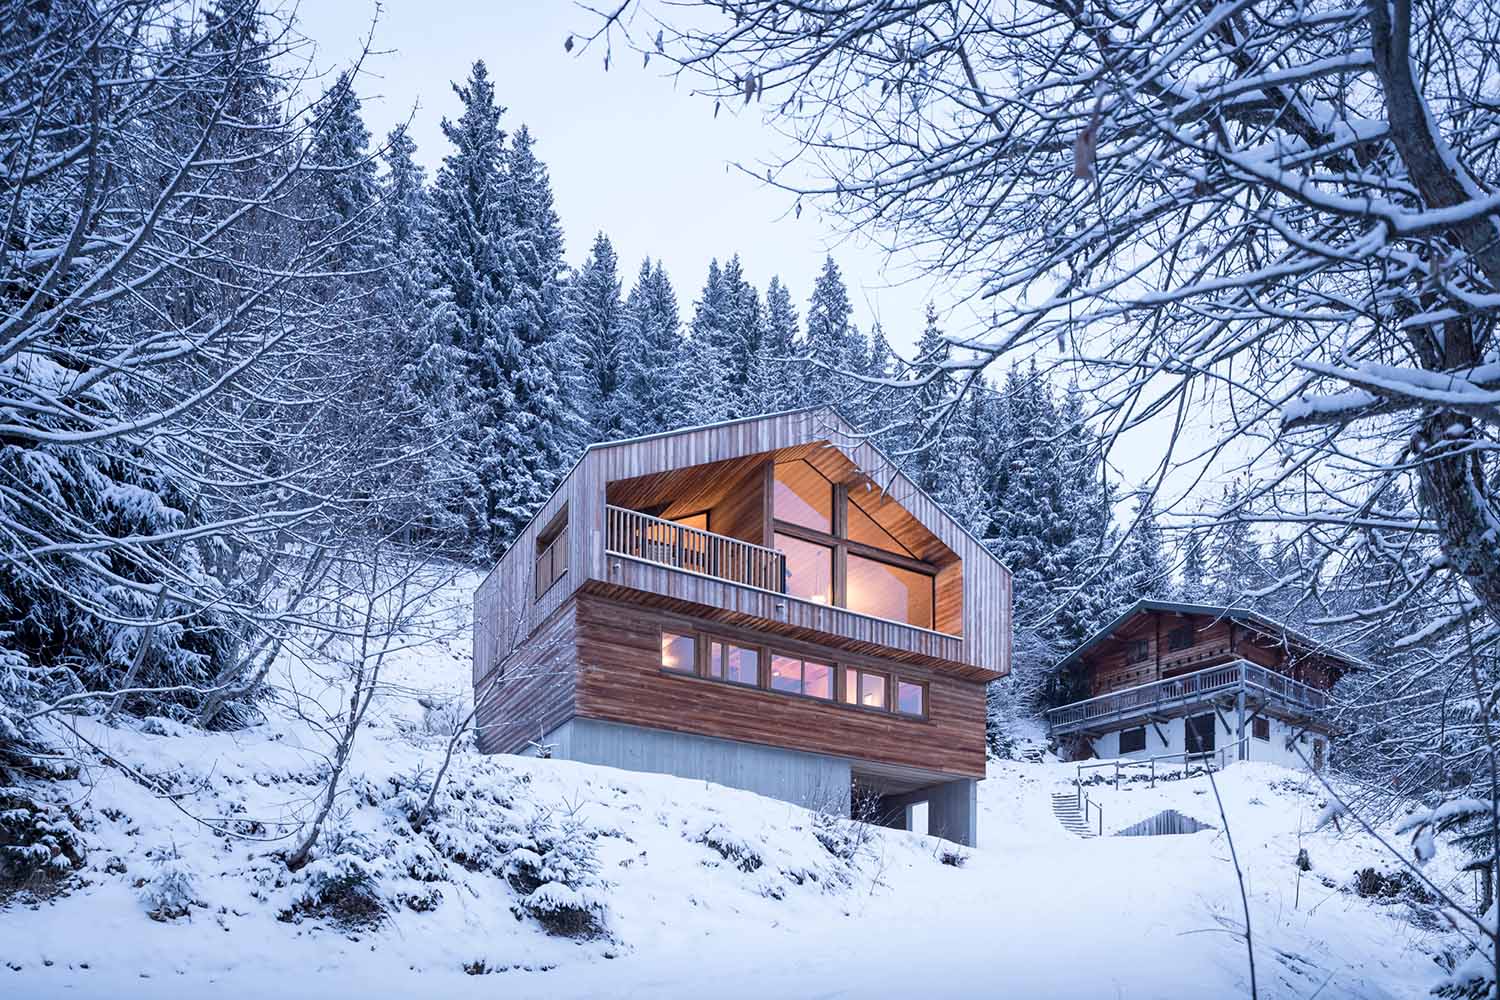 Mountain House, Studio Razavi | © Olivier-Martin Gambier 